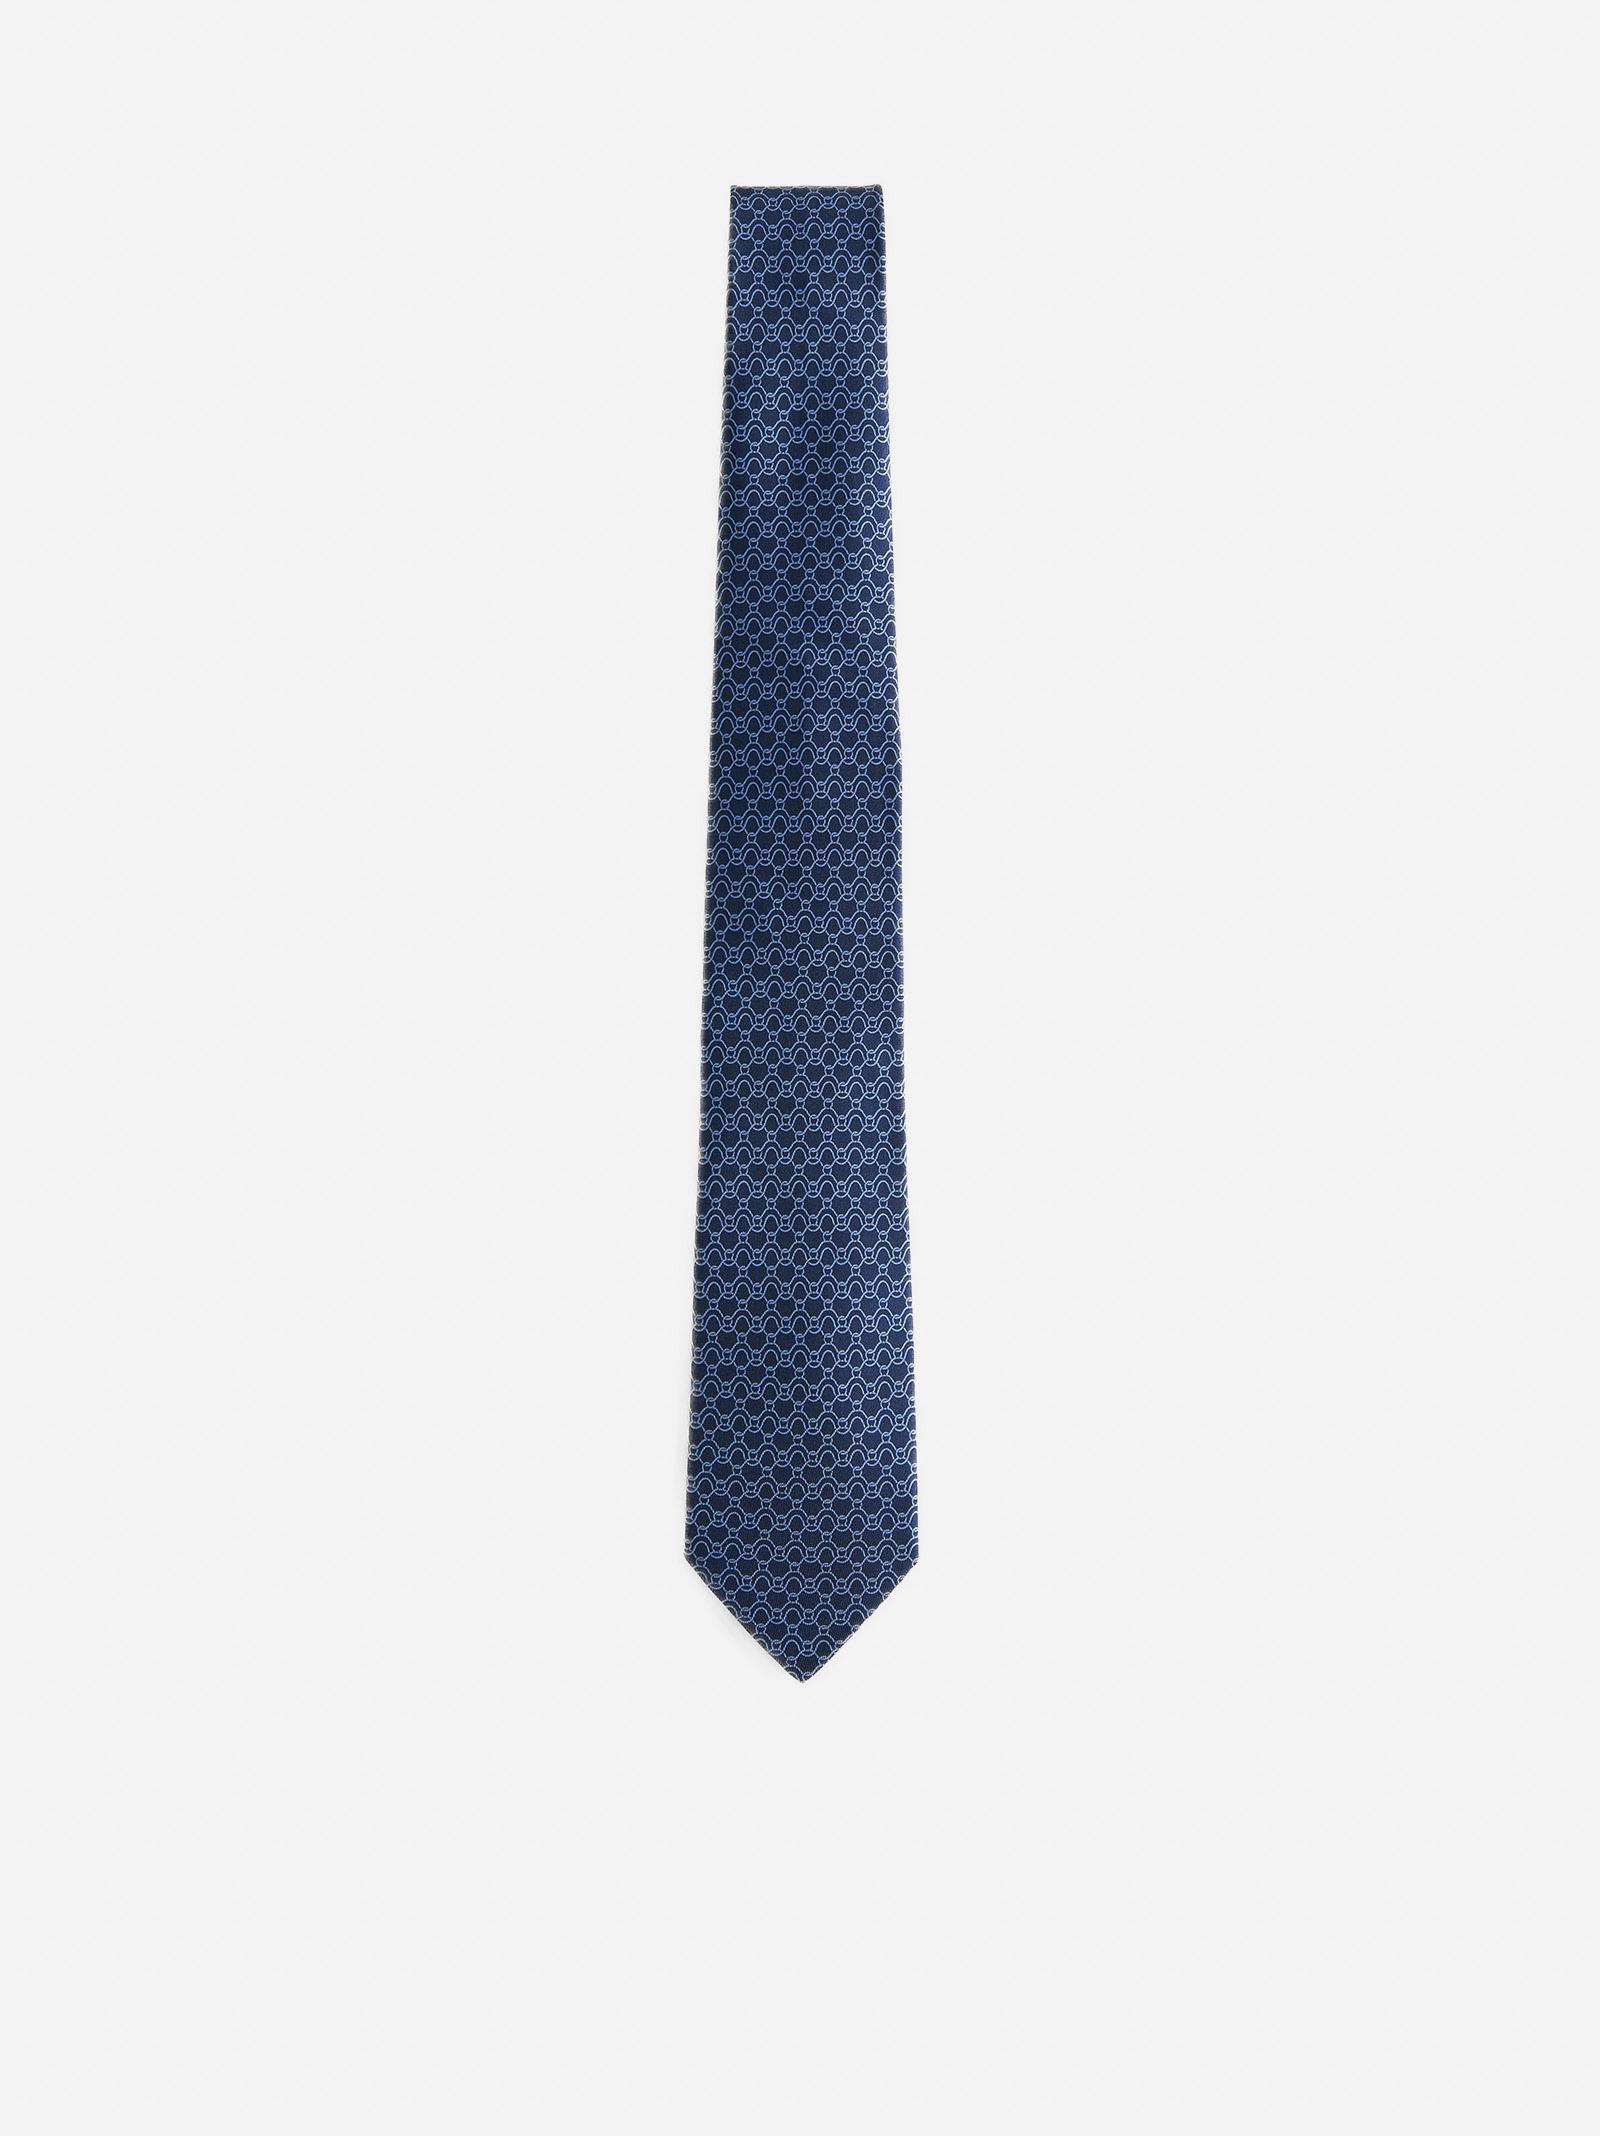 Shop Ferragamo Traccia Silk Tie In Navy